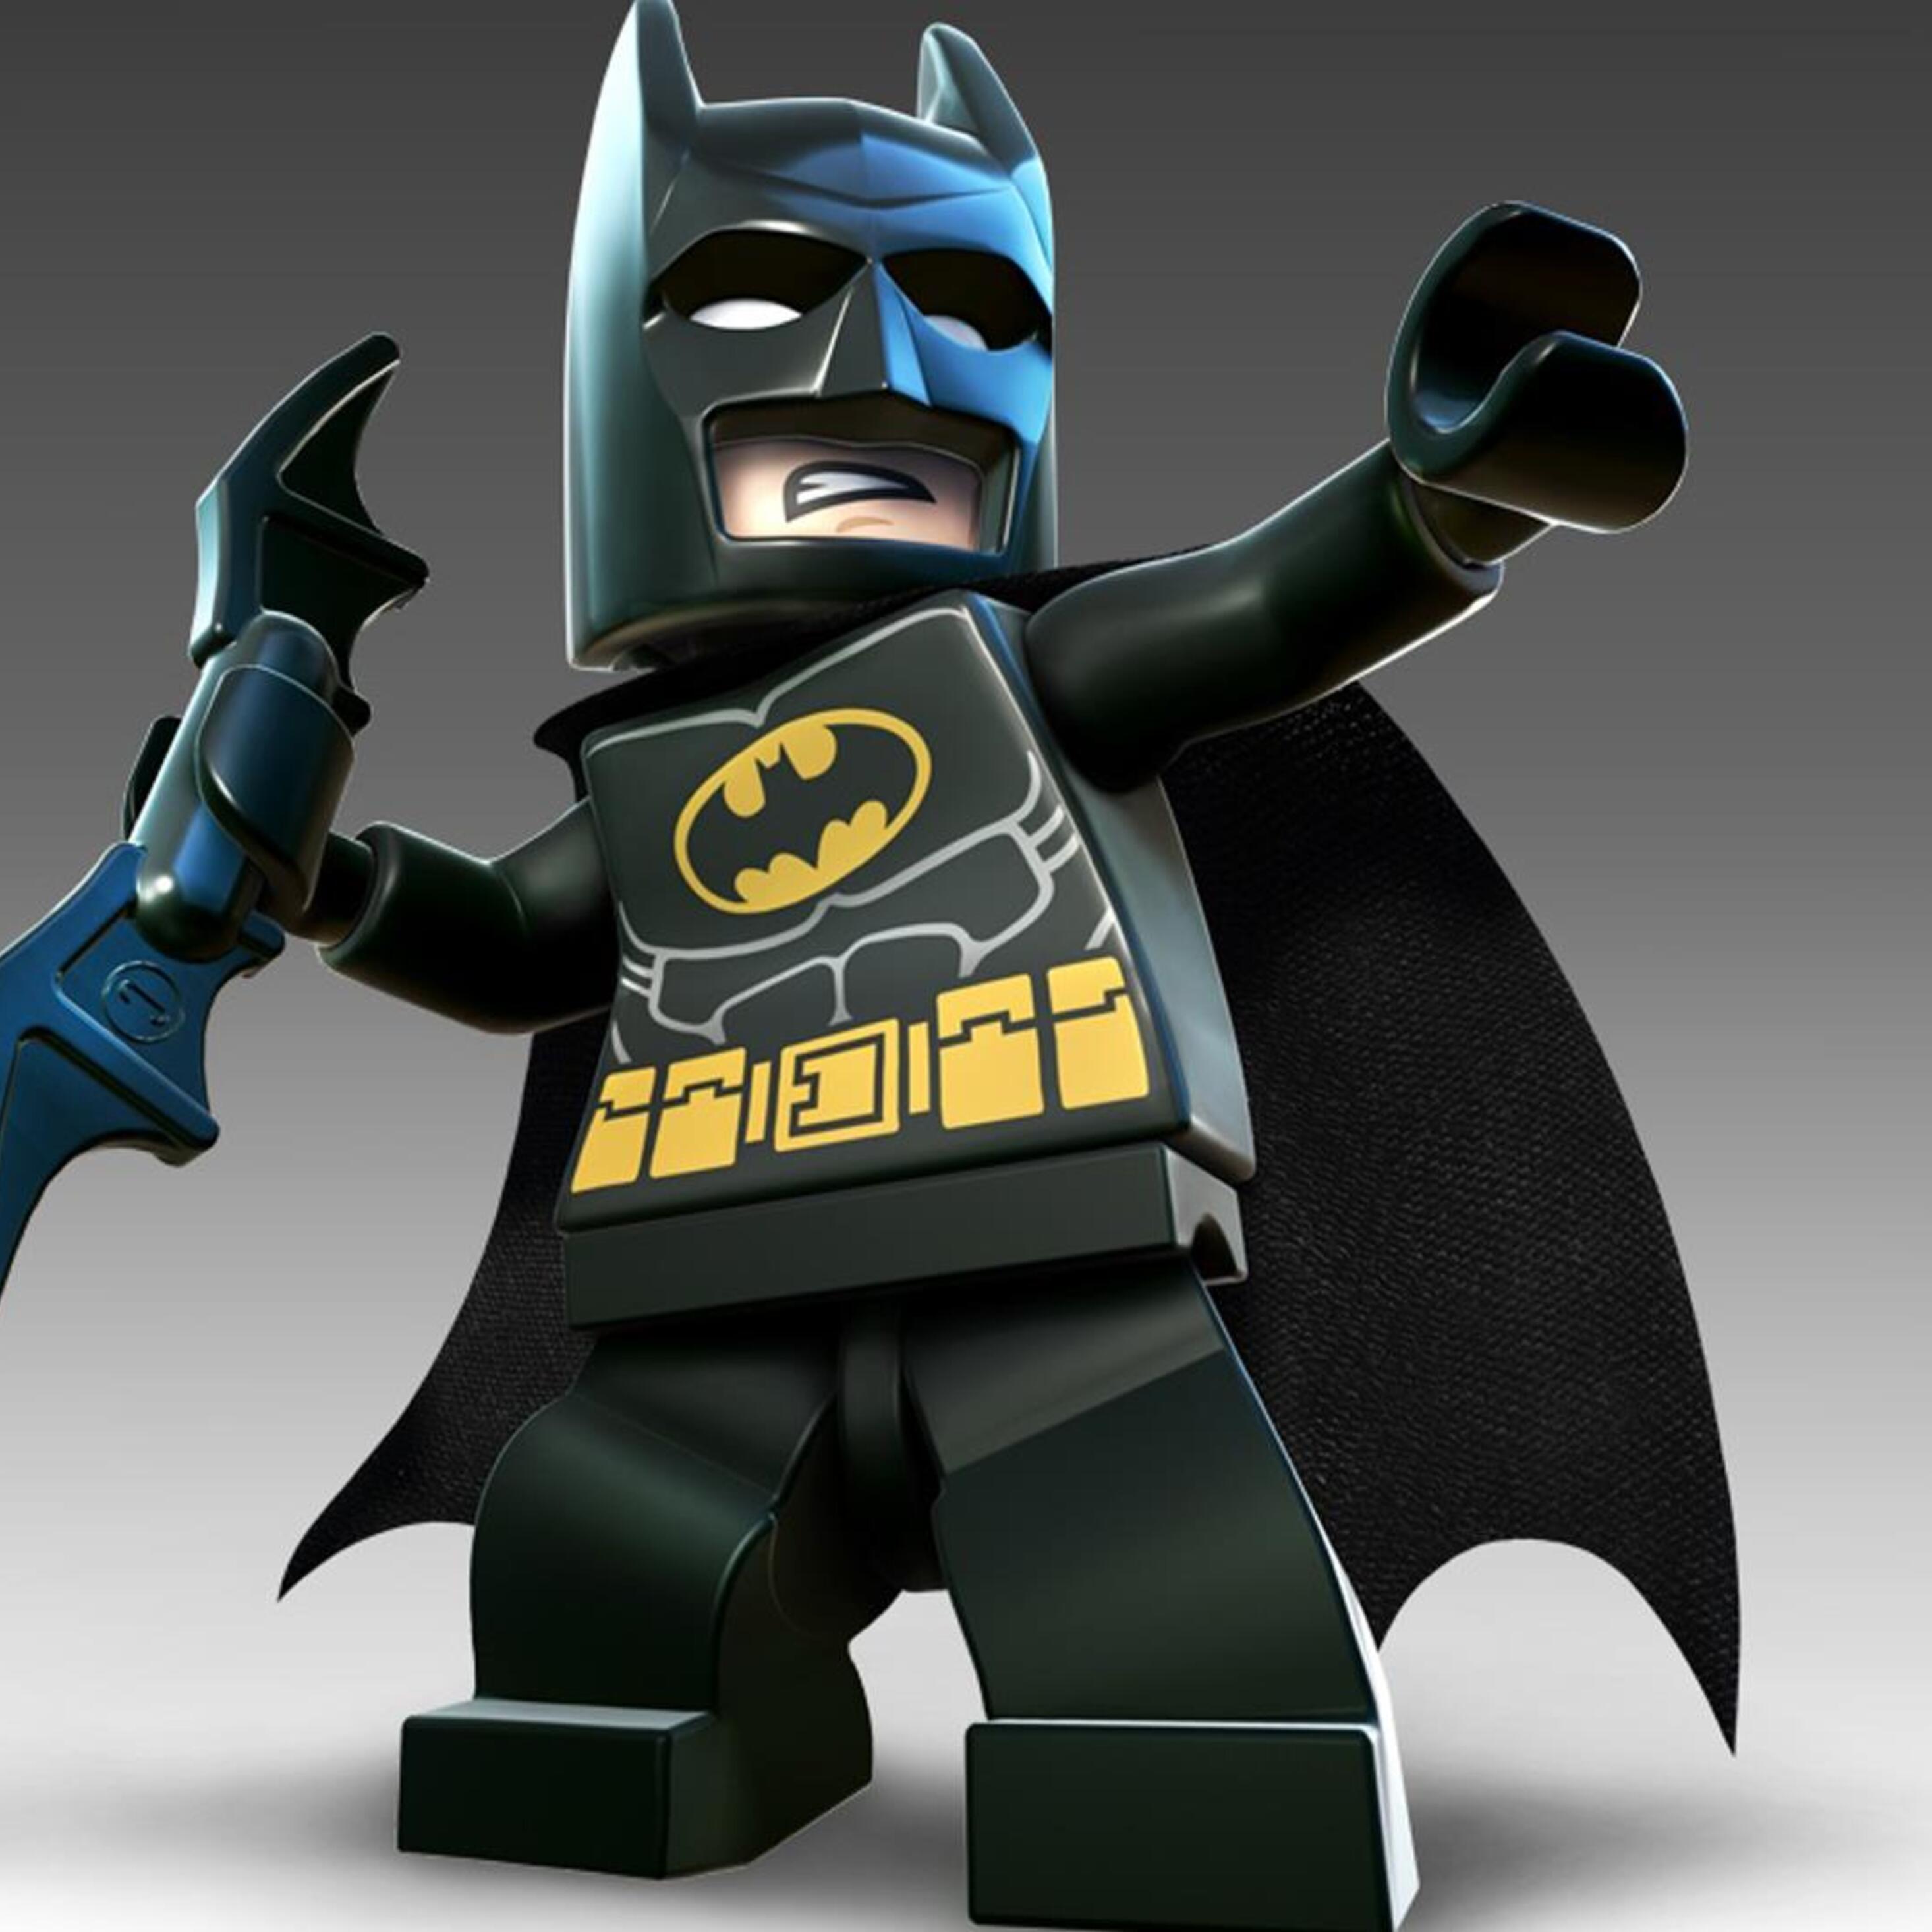 Batman Lego iPad Pro Retina Display HD 4k Wallpaper, Image, Background, Photo and Picture